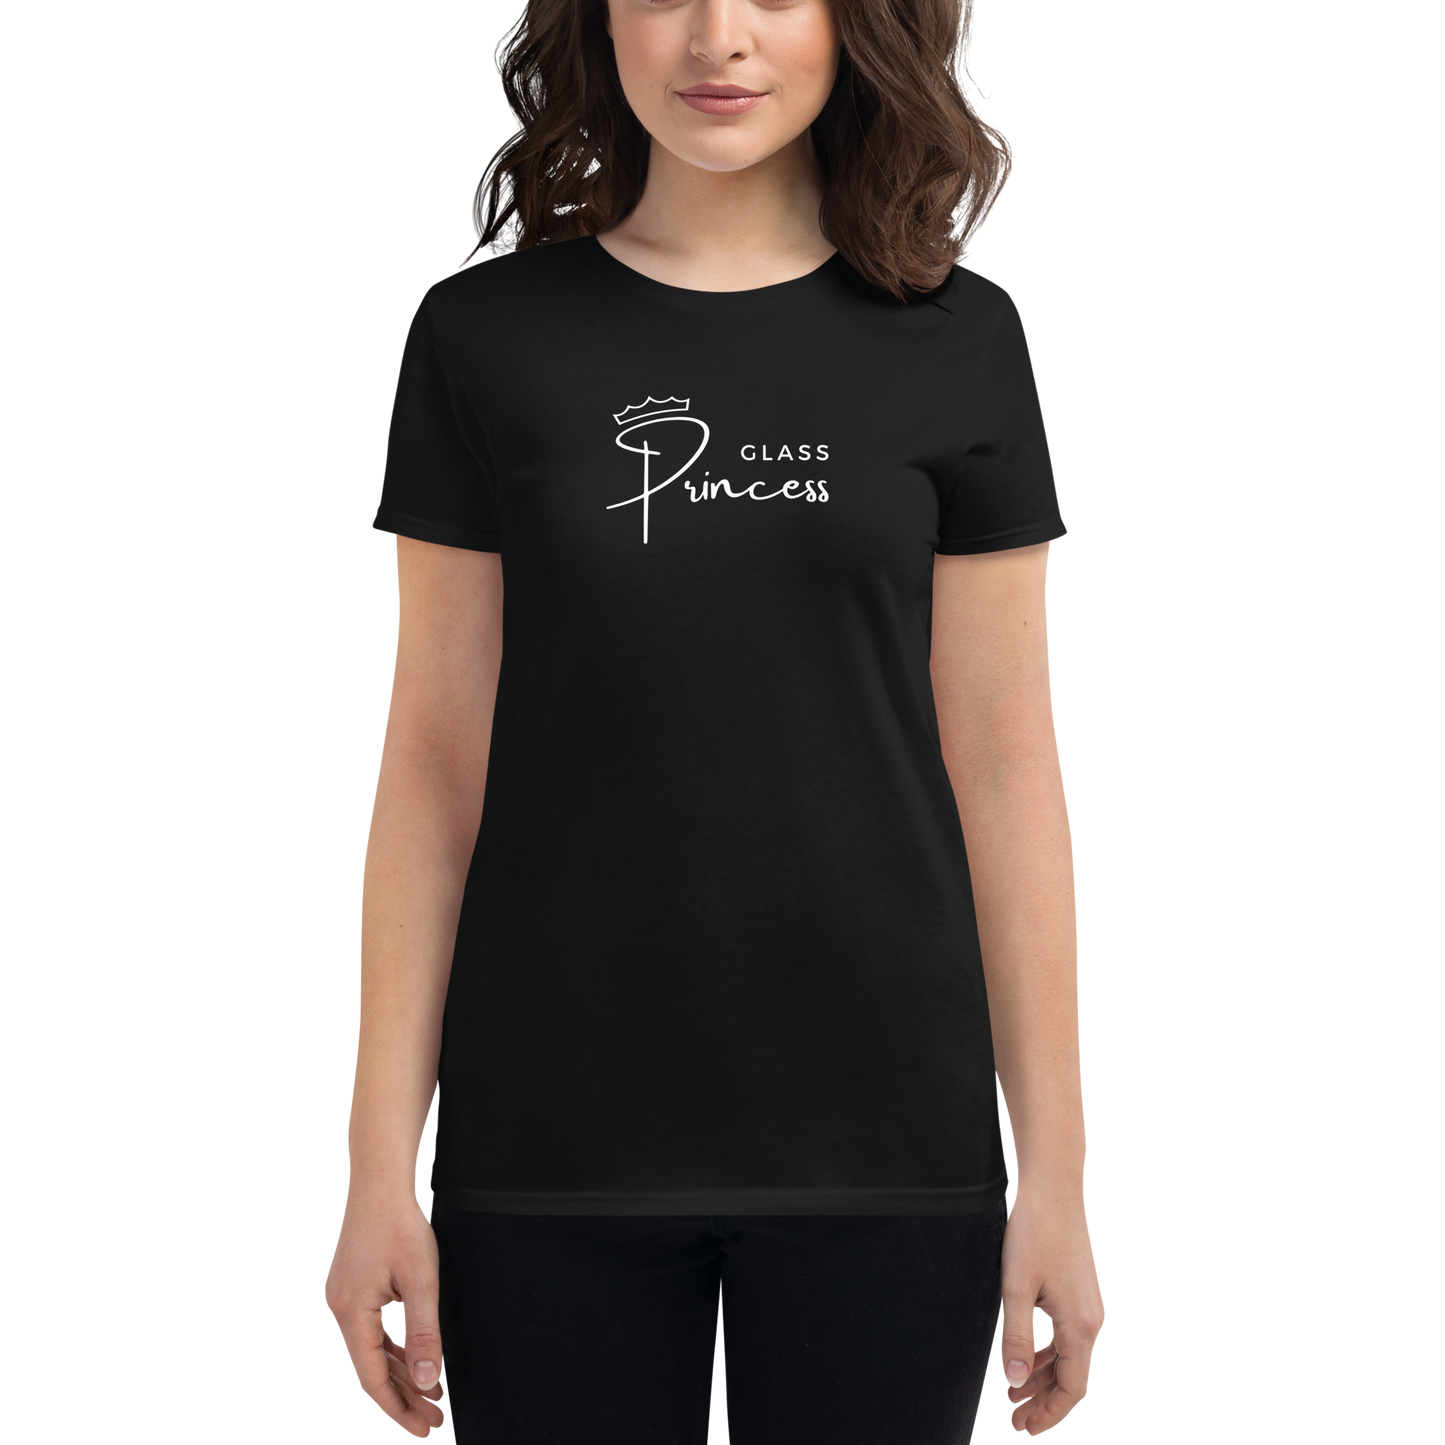 Glass Princess - Women's Fashion Fit T-Shirt - Gildan 880